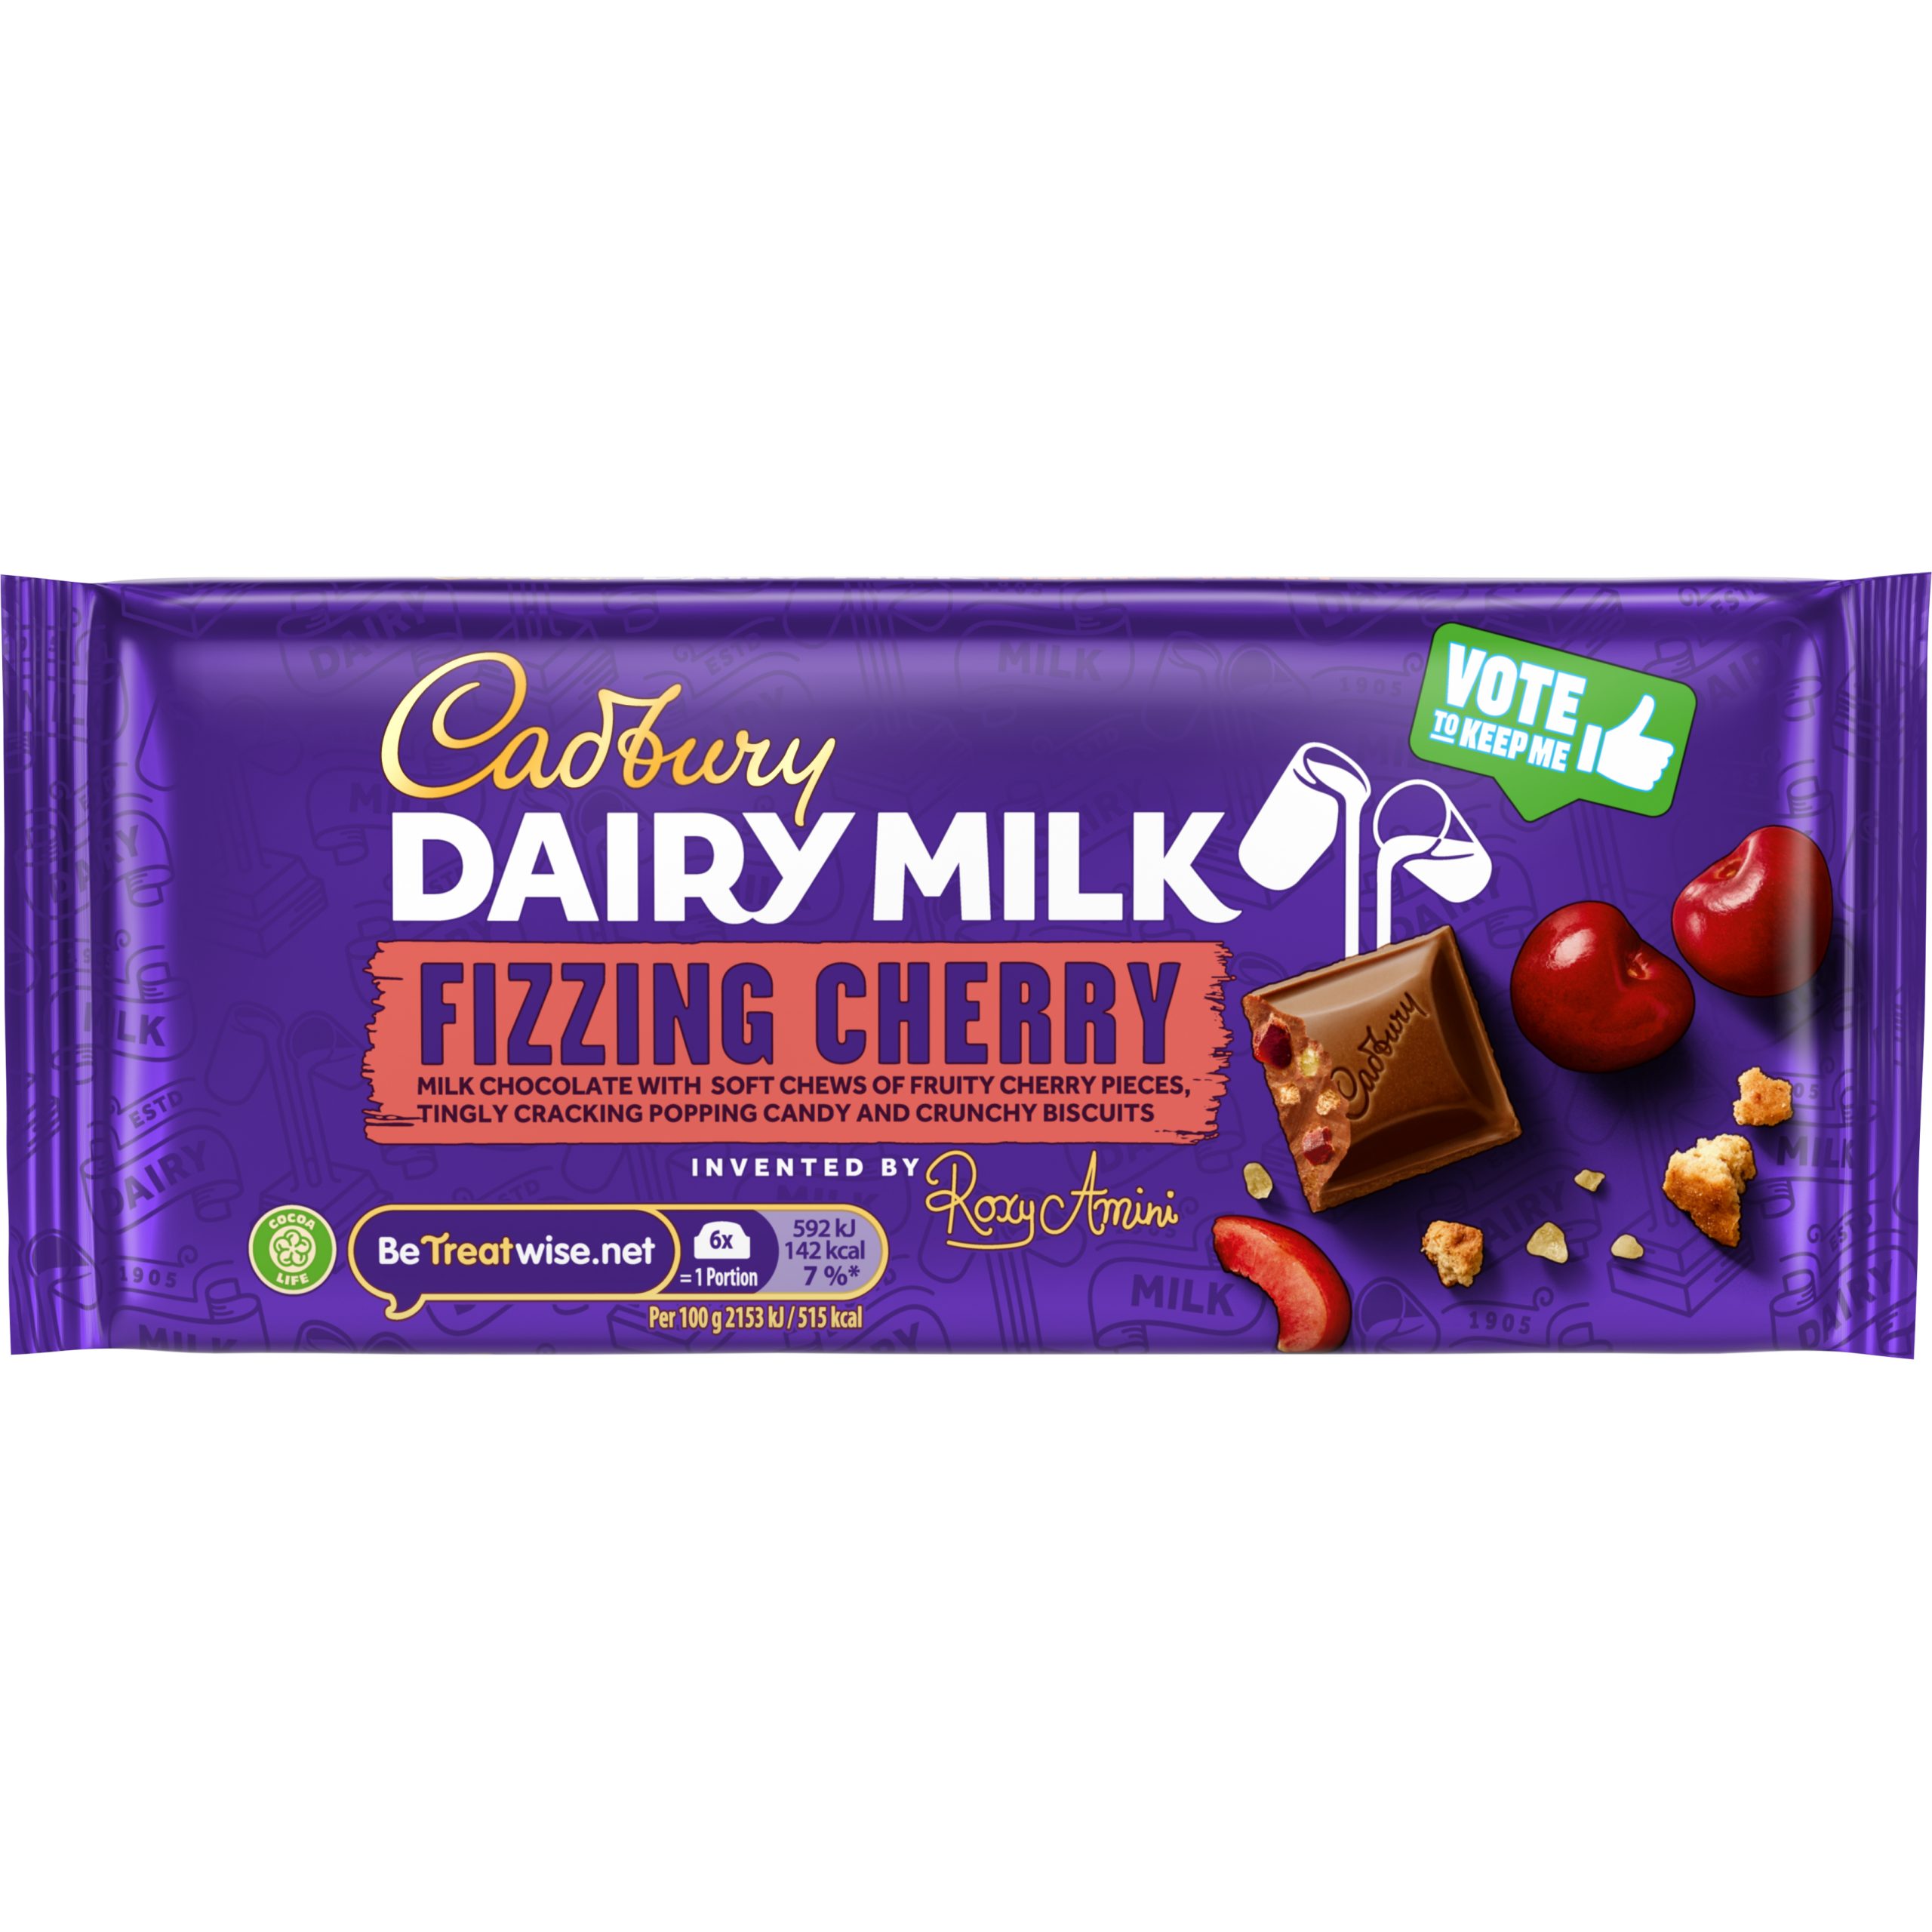 Cadbury Dairy Milk invites shoppers to ‘Be the Judge’